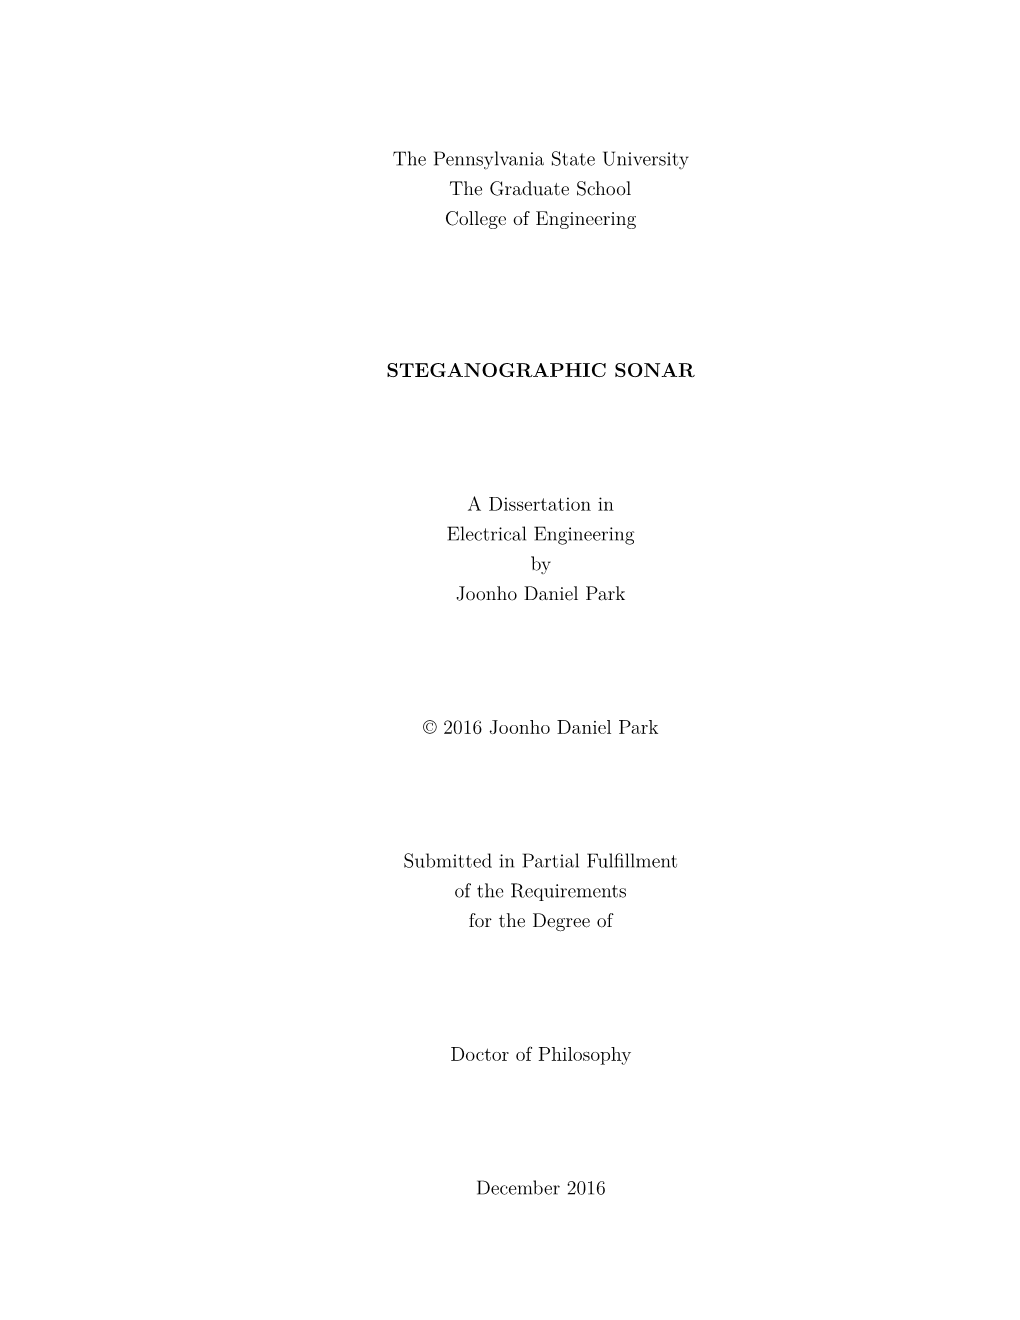 Open Park-Dissertation-Steganographic Sonar.Pdf